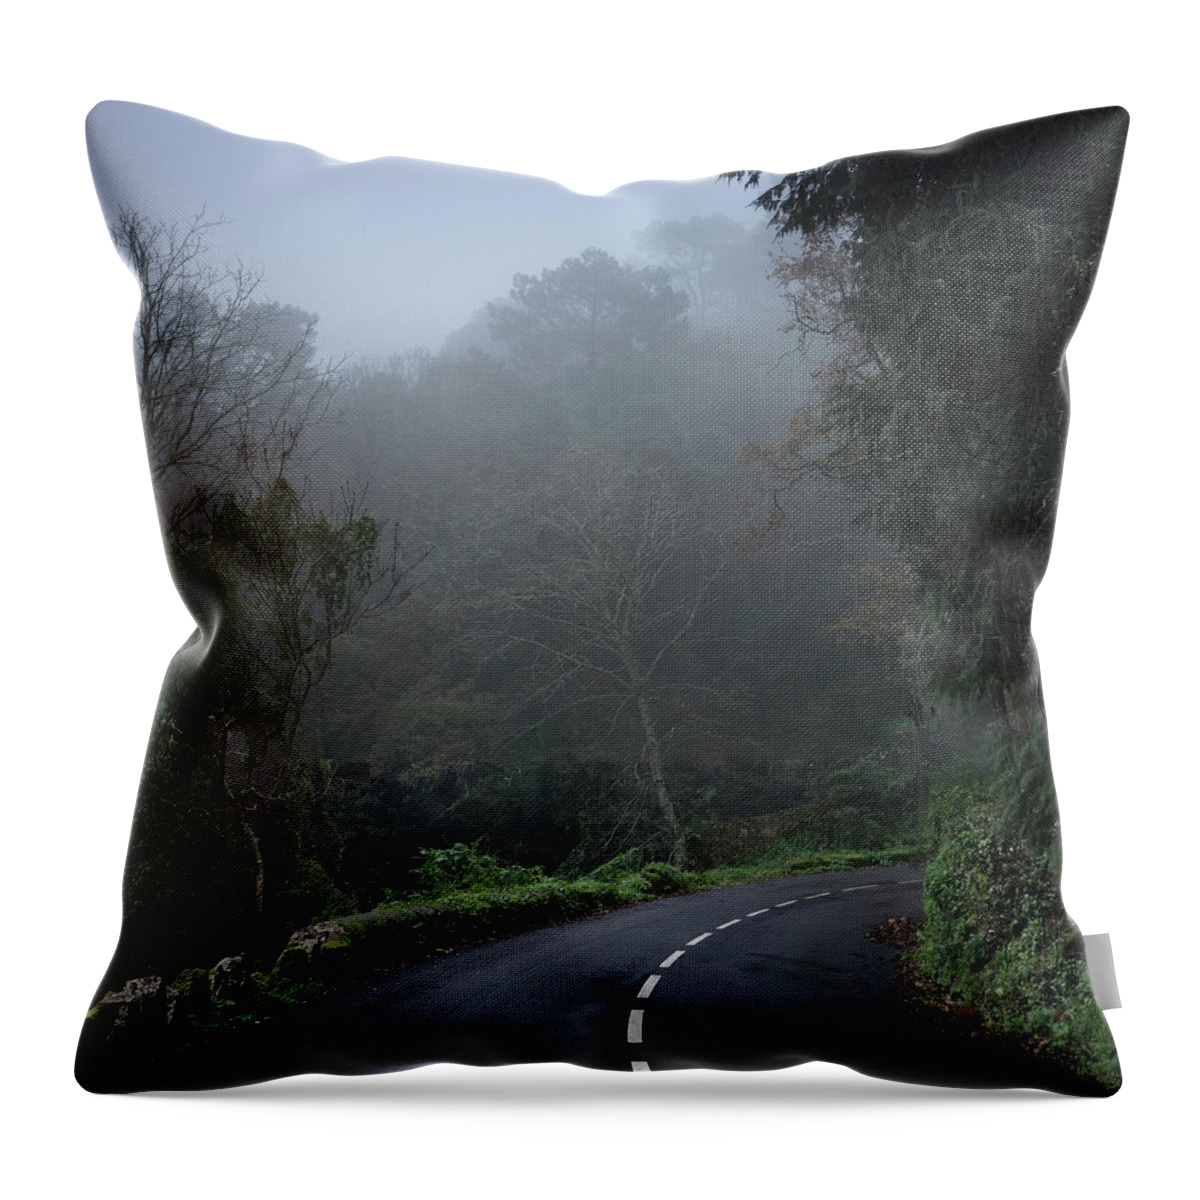 Curve Throw Pillow featuring the photograph Empty Road Under Mist by Julio Lopez Saguar